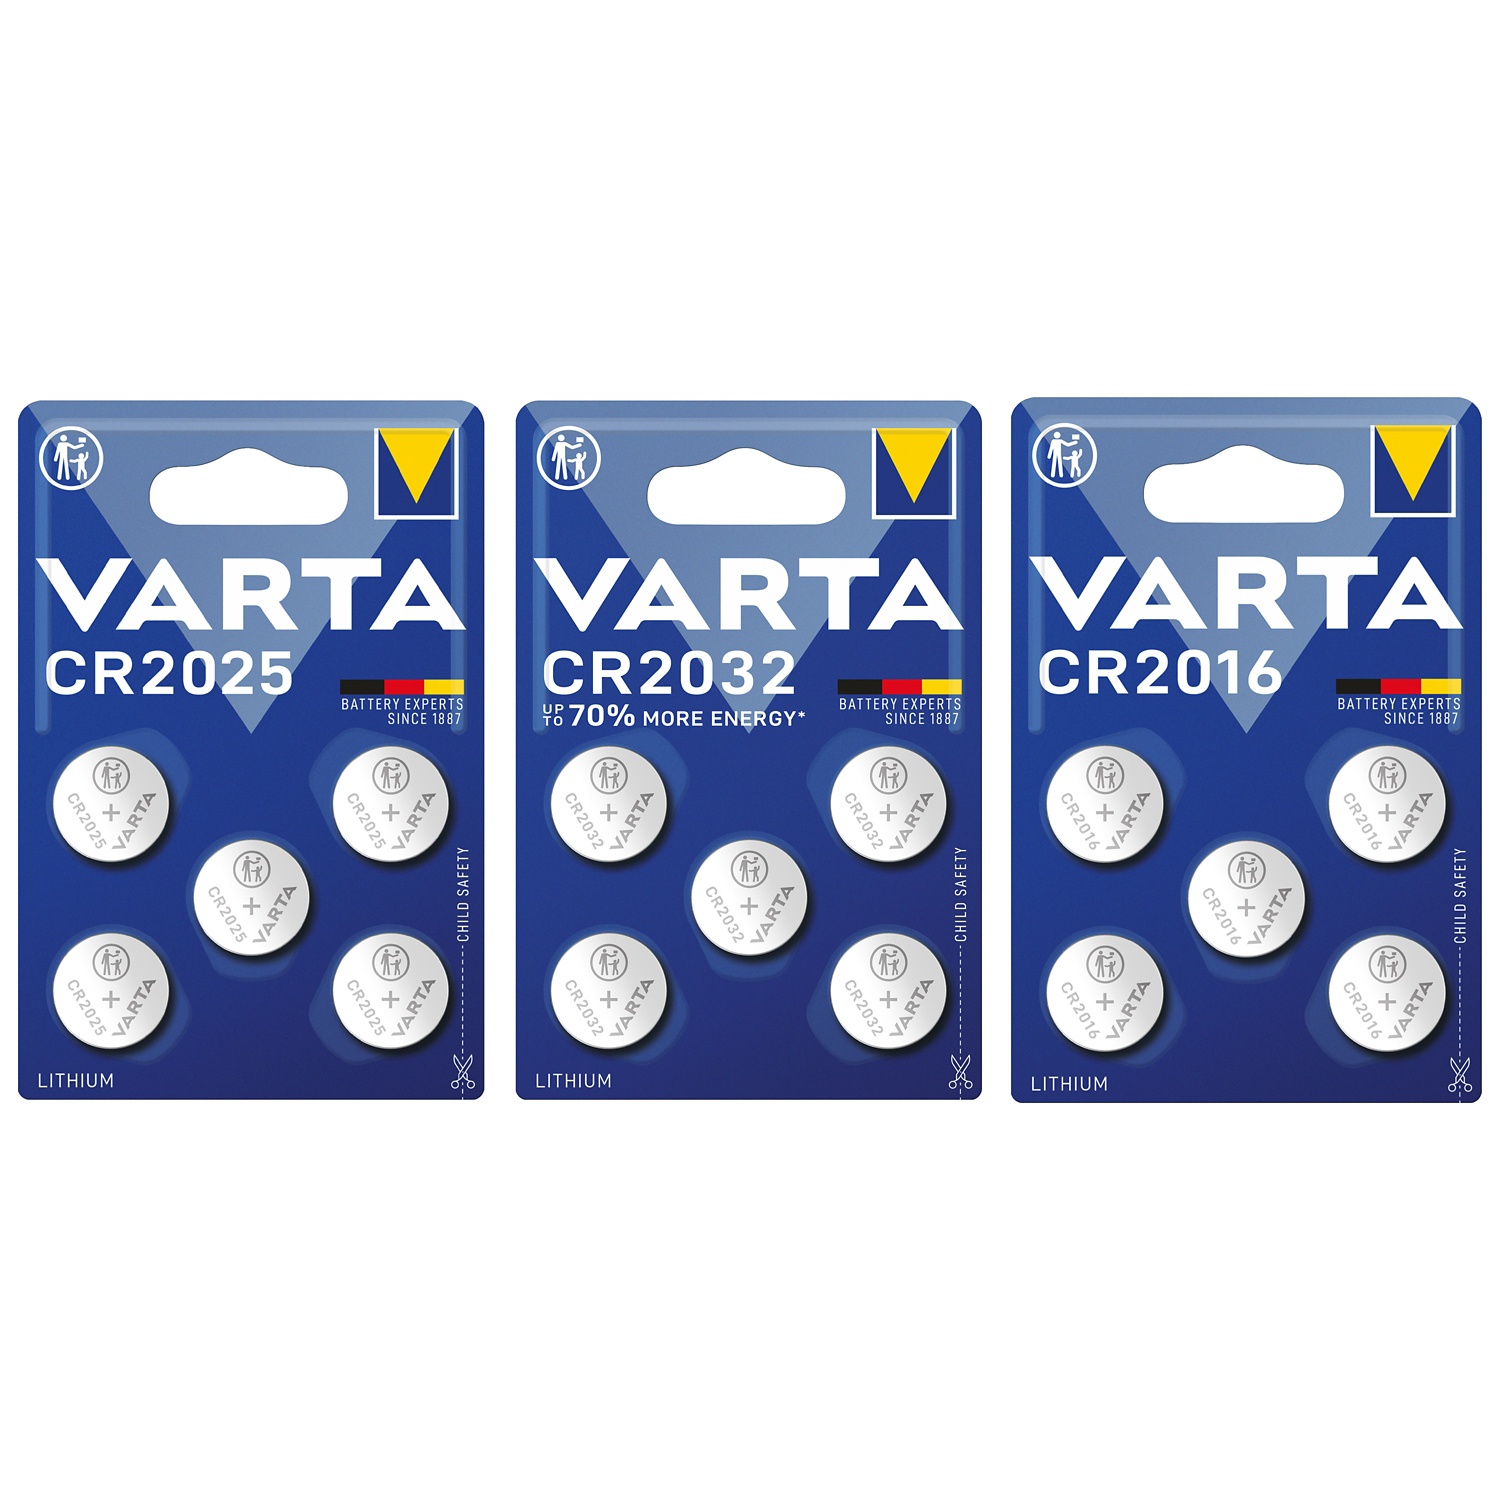 VARTA Knopfzellen-Batterien